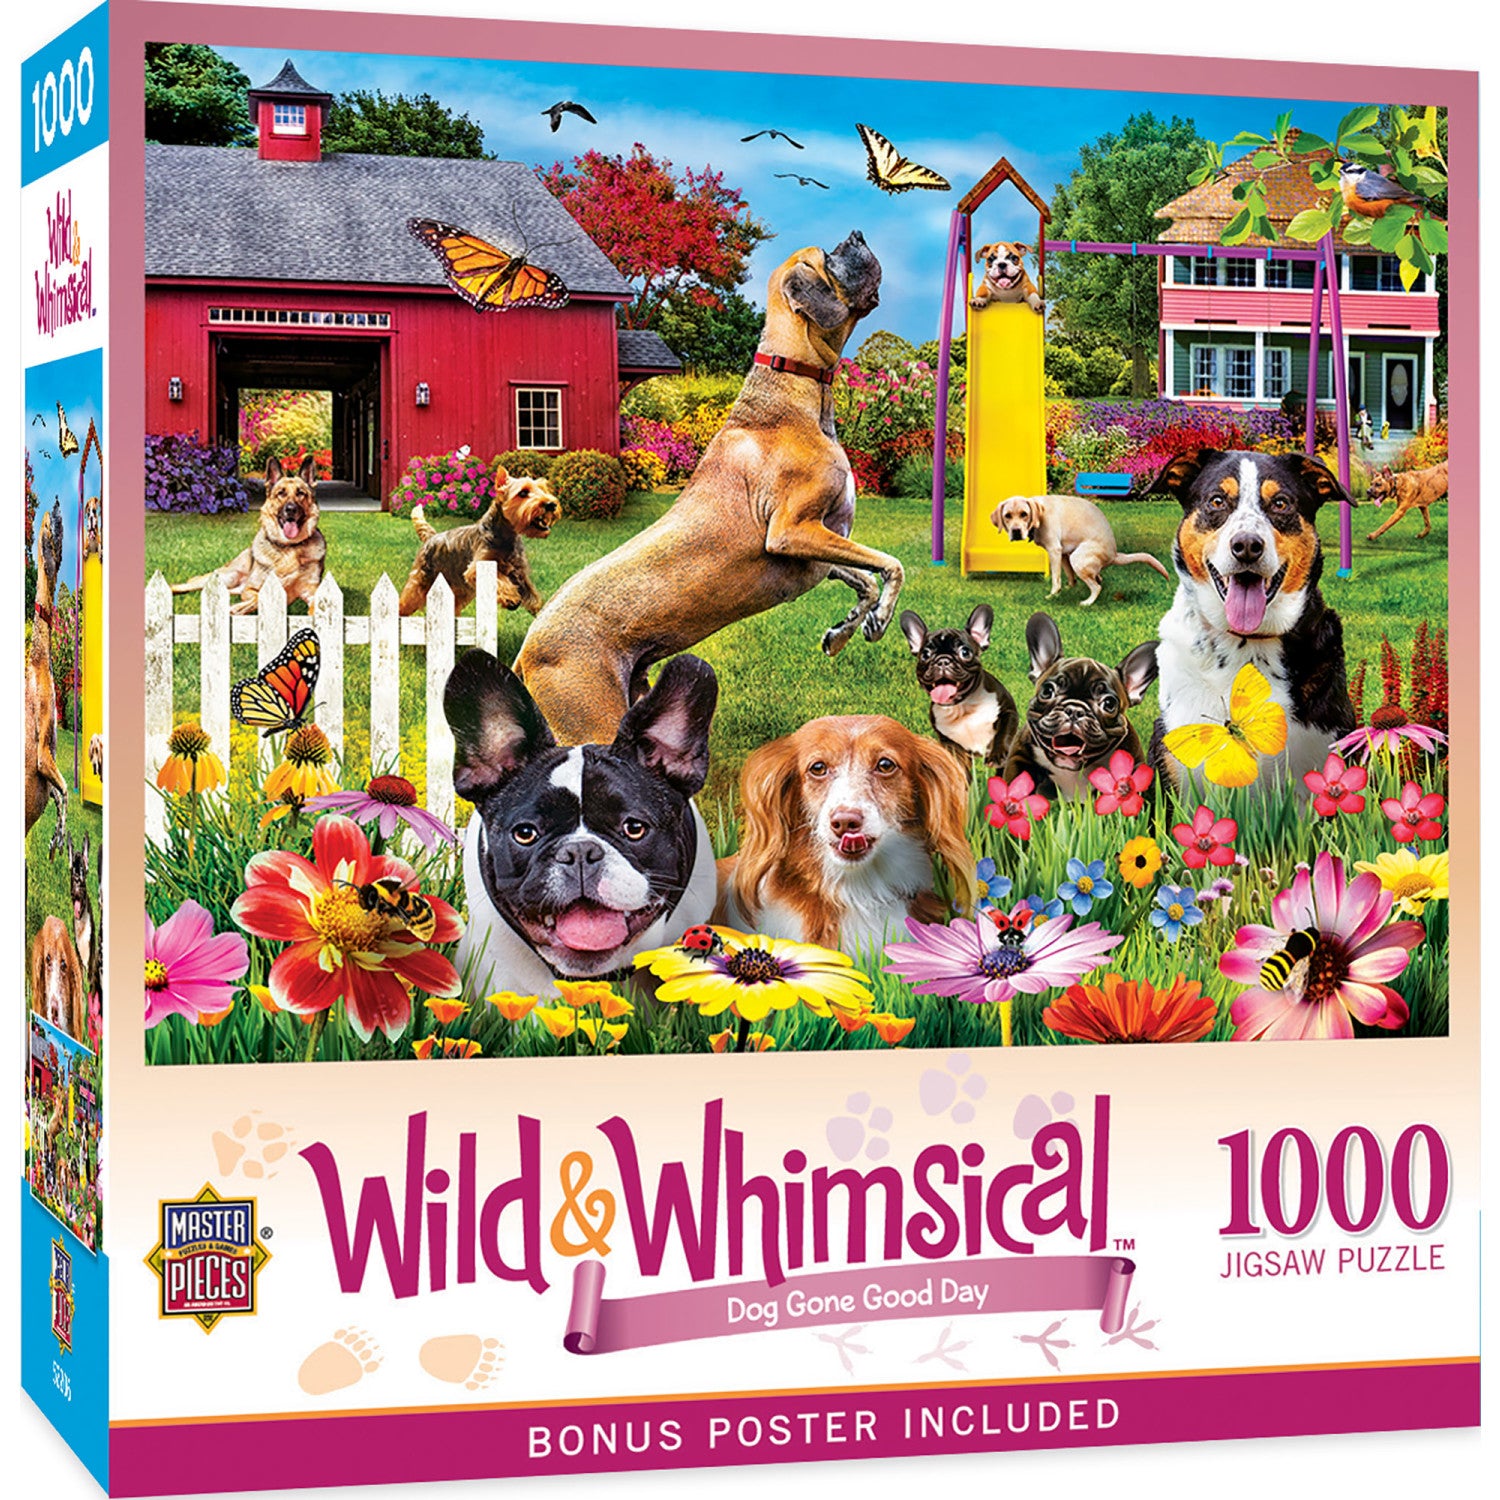 Wild & Whimsical - Dog Gone Good Day 1000 Piece Jigsaw Puzzle